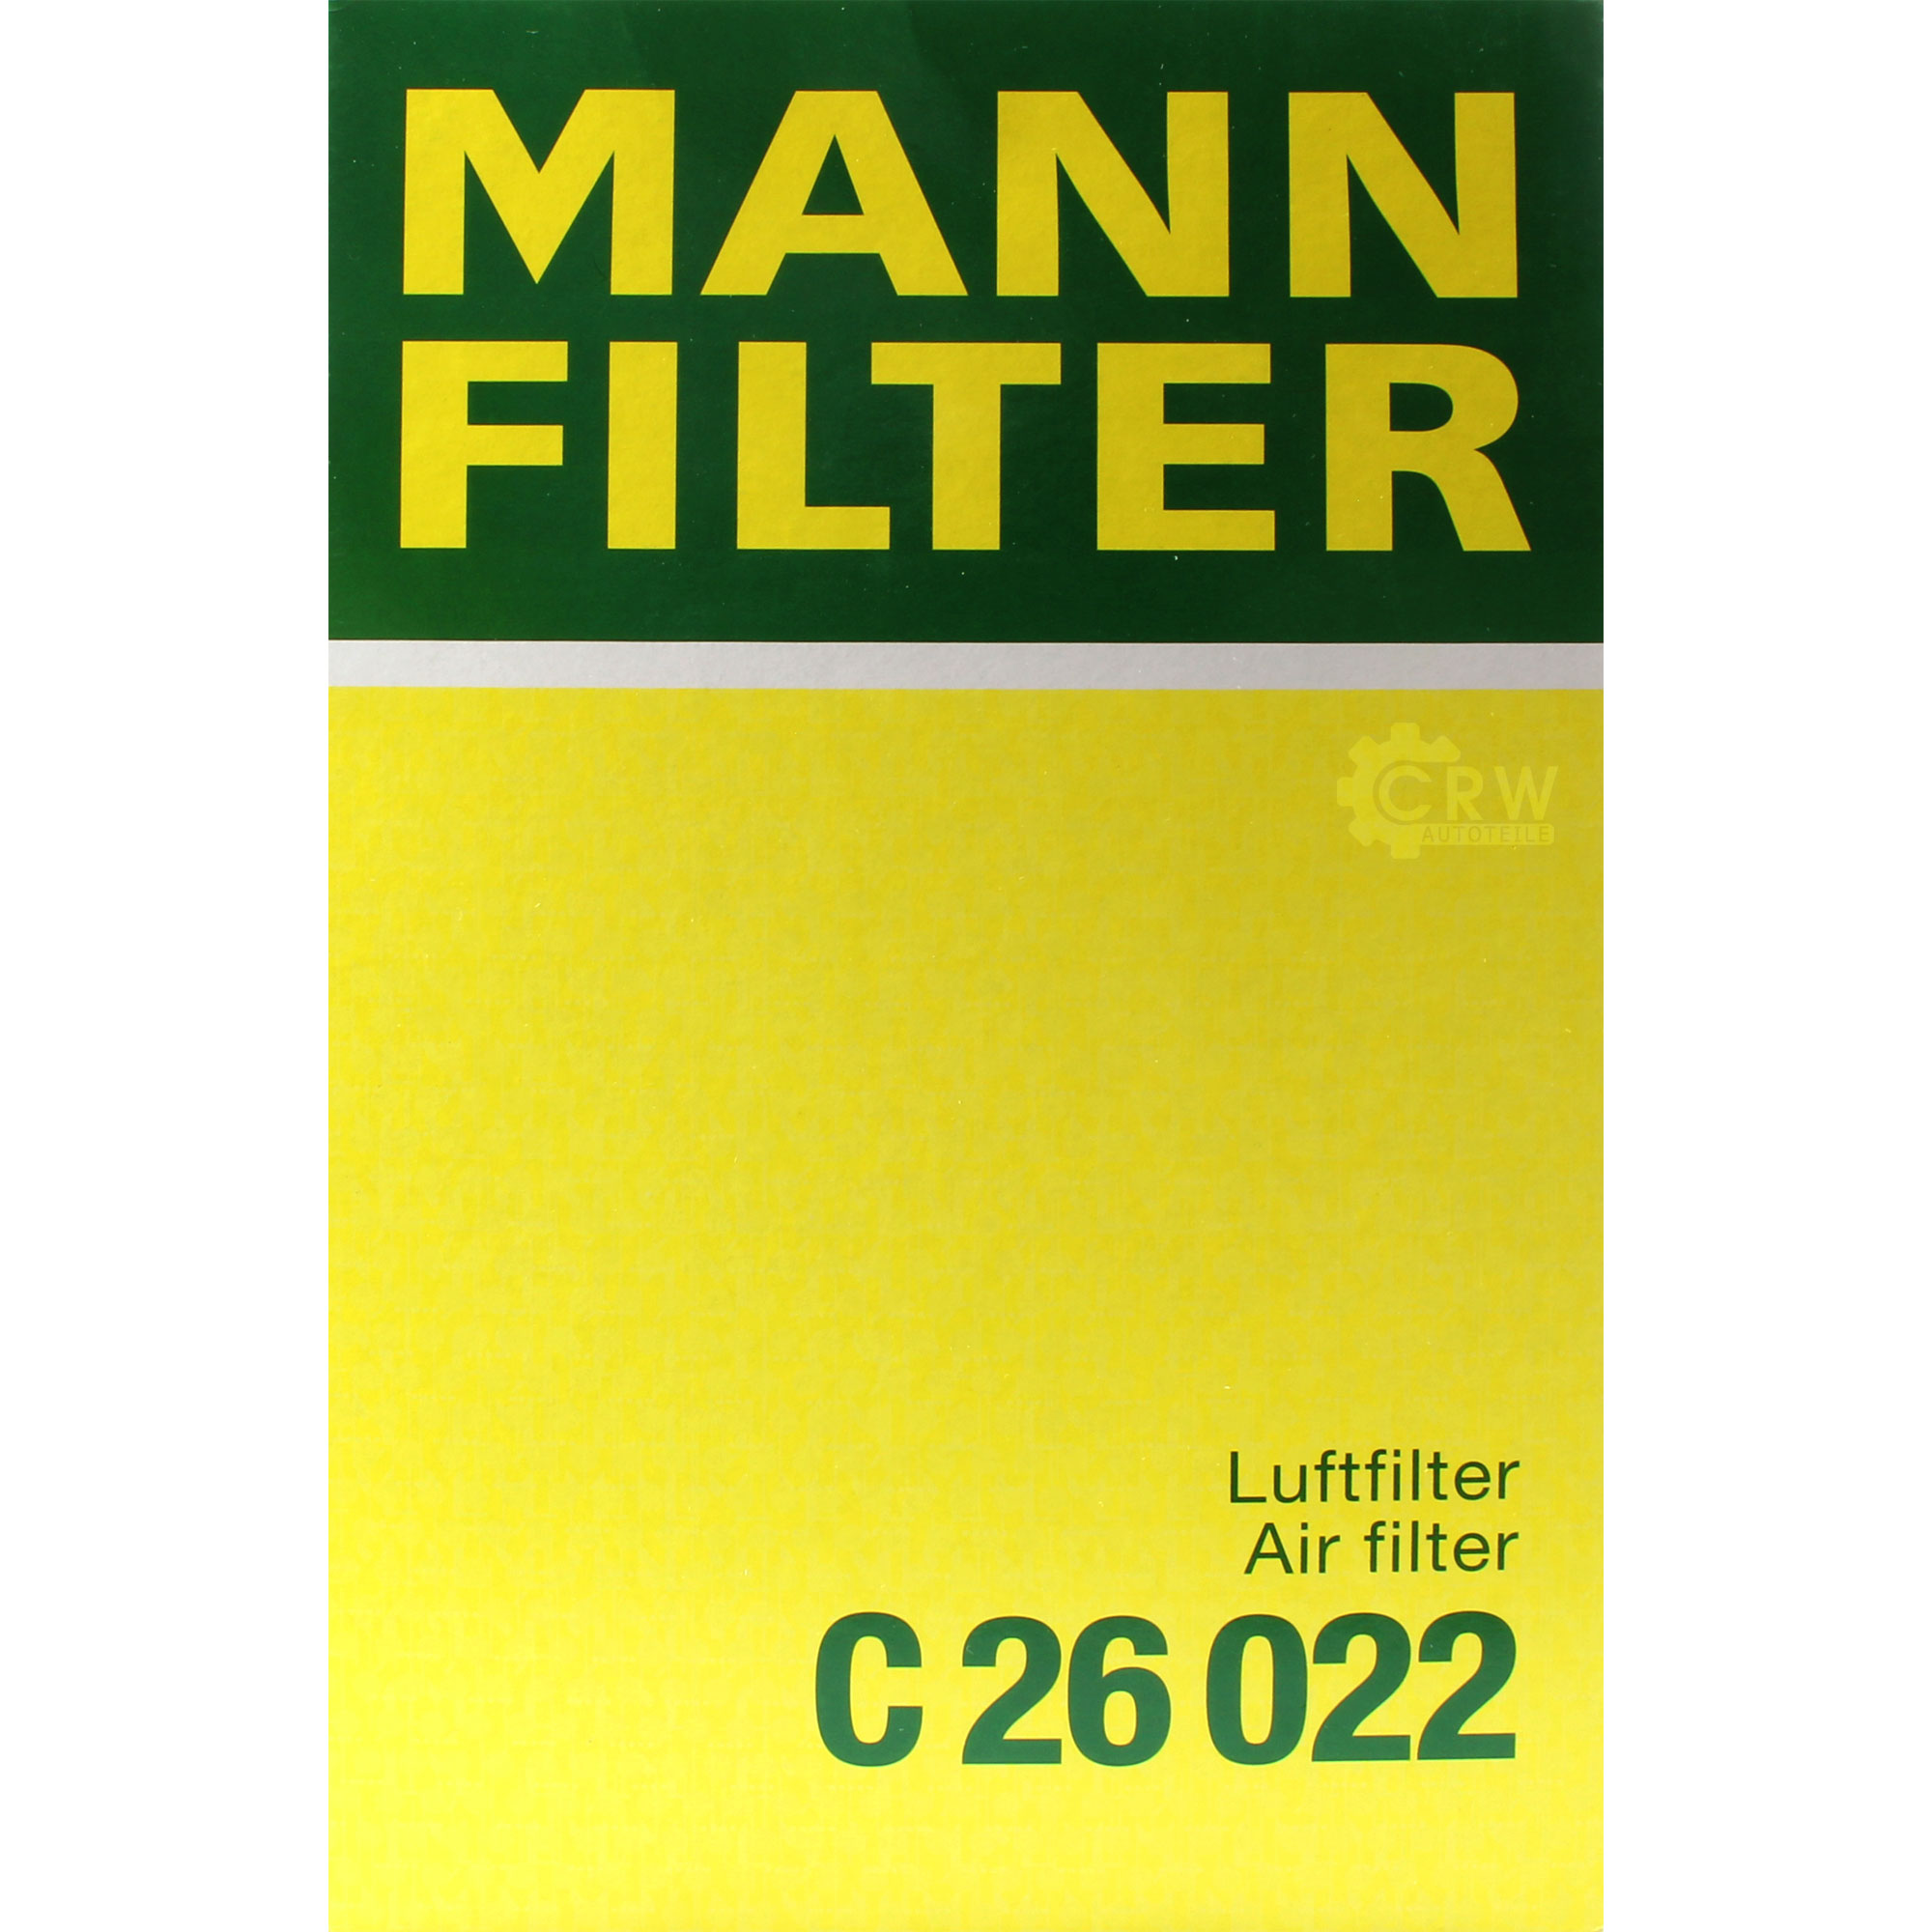 MANN-FILTER Luftfilter für Hyundai i30 GD 1.4 1.6 GDi MD UD 1.8 KIA Cee'D JD